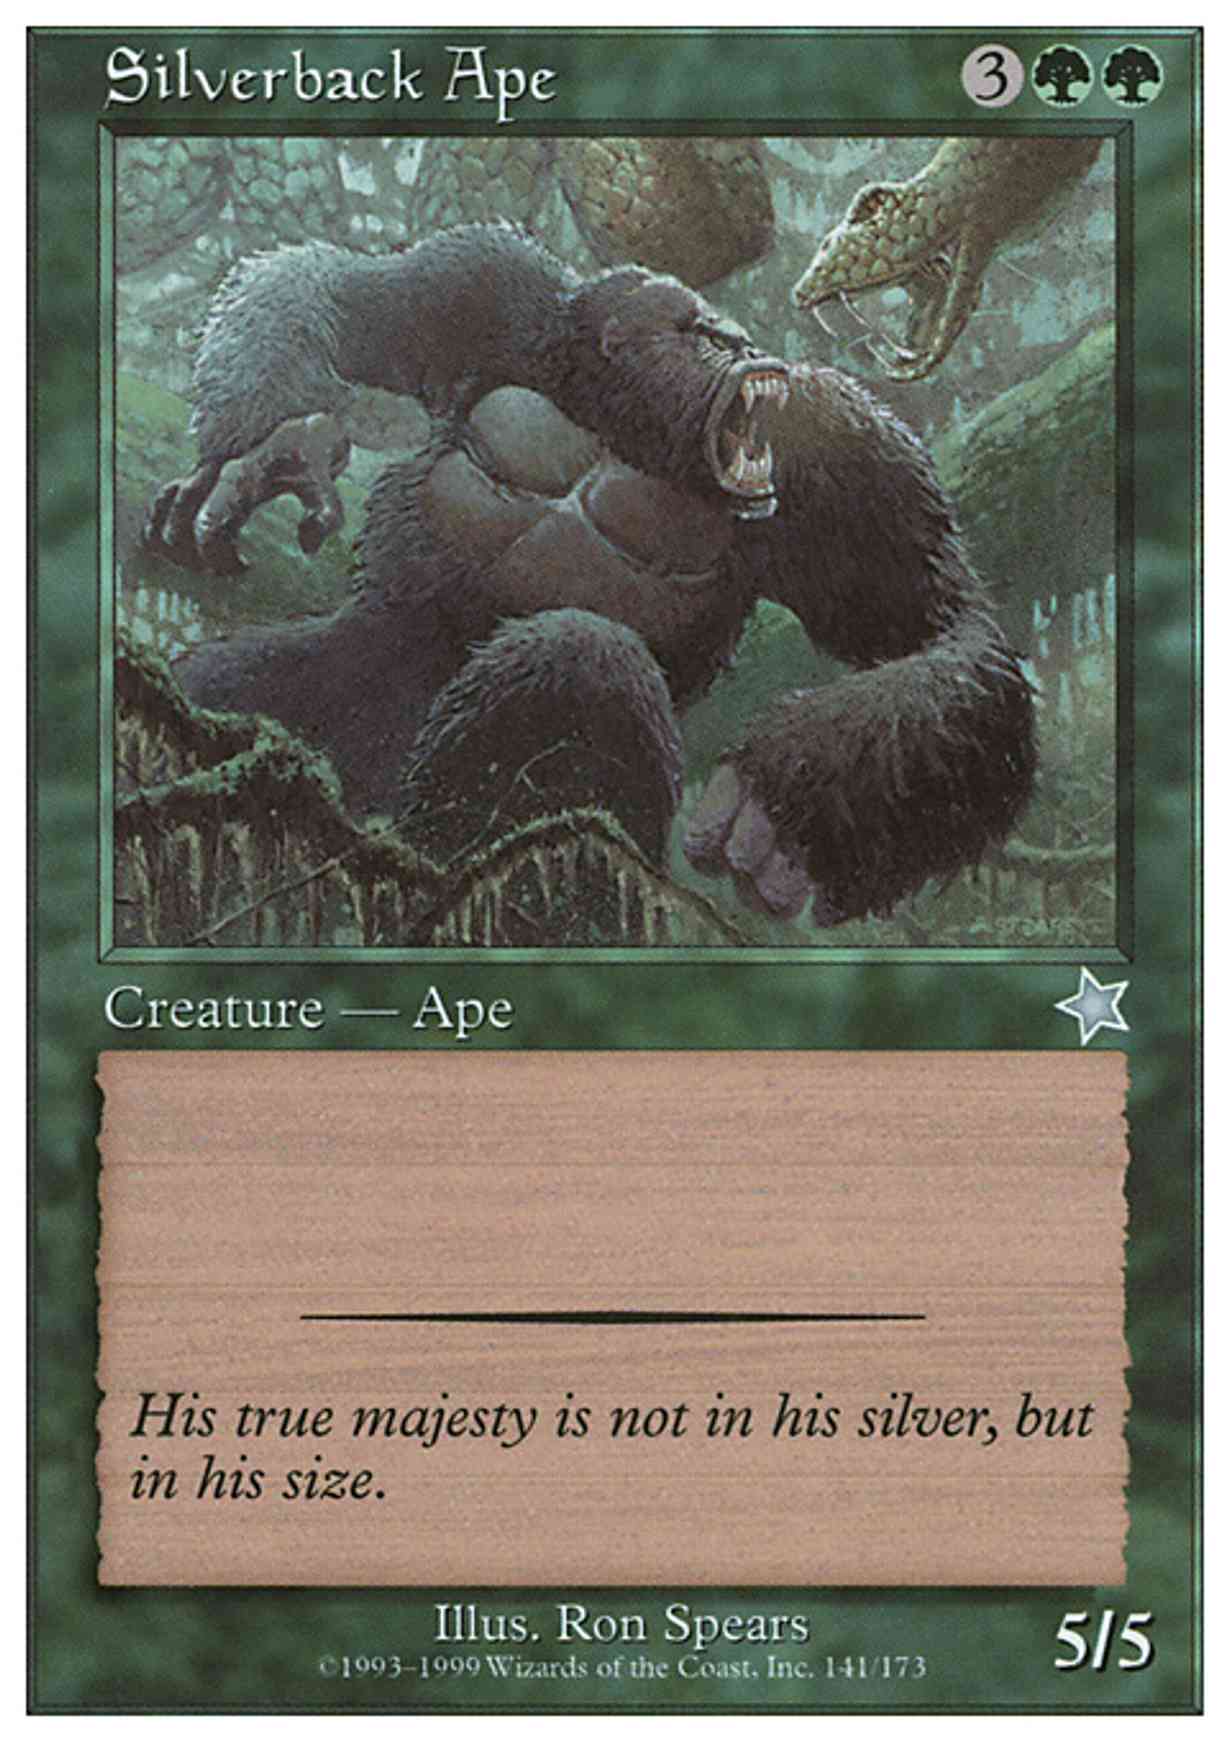 Silverback Ape magic card front